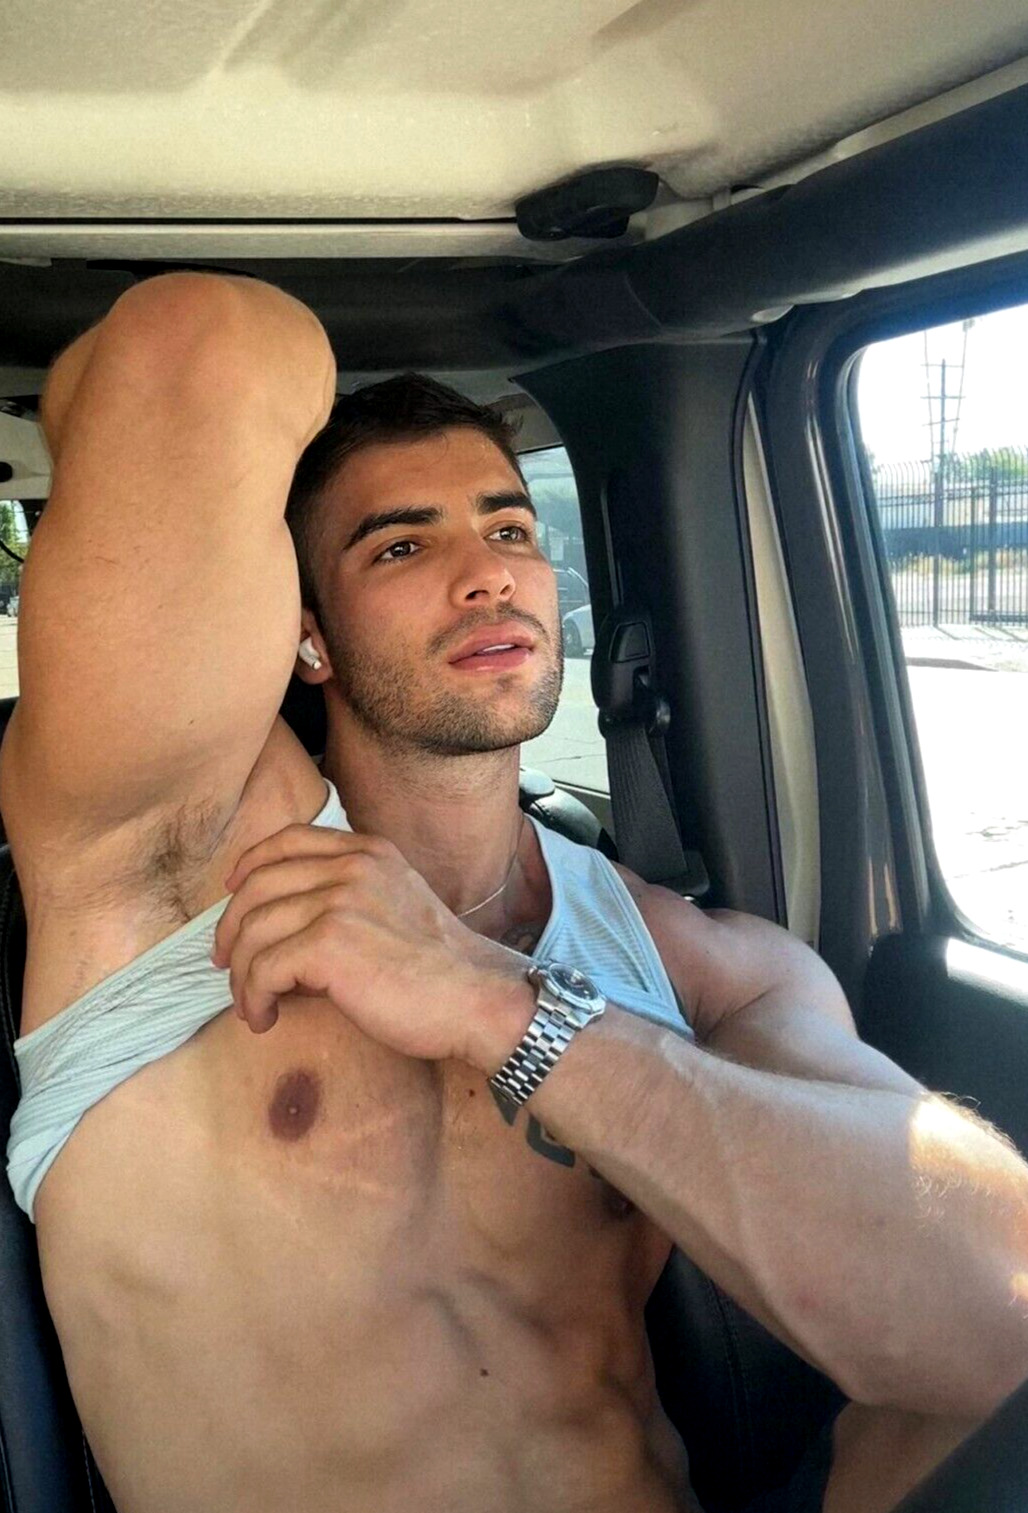 Shirtless Male Muscular Hunk Arm Pit Show Car Hunk Man PHOTO 4X6 H567